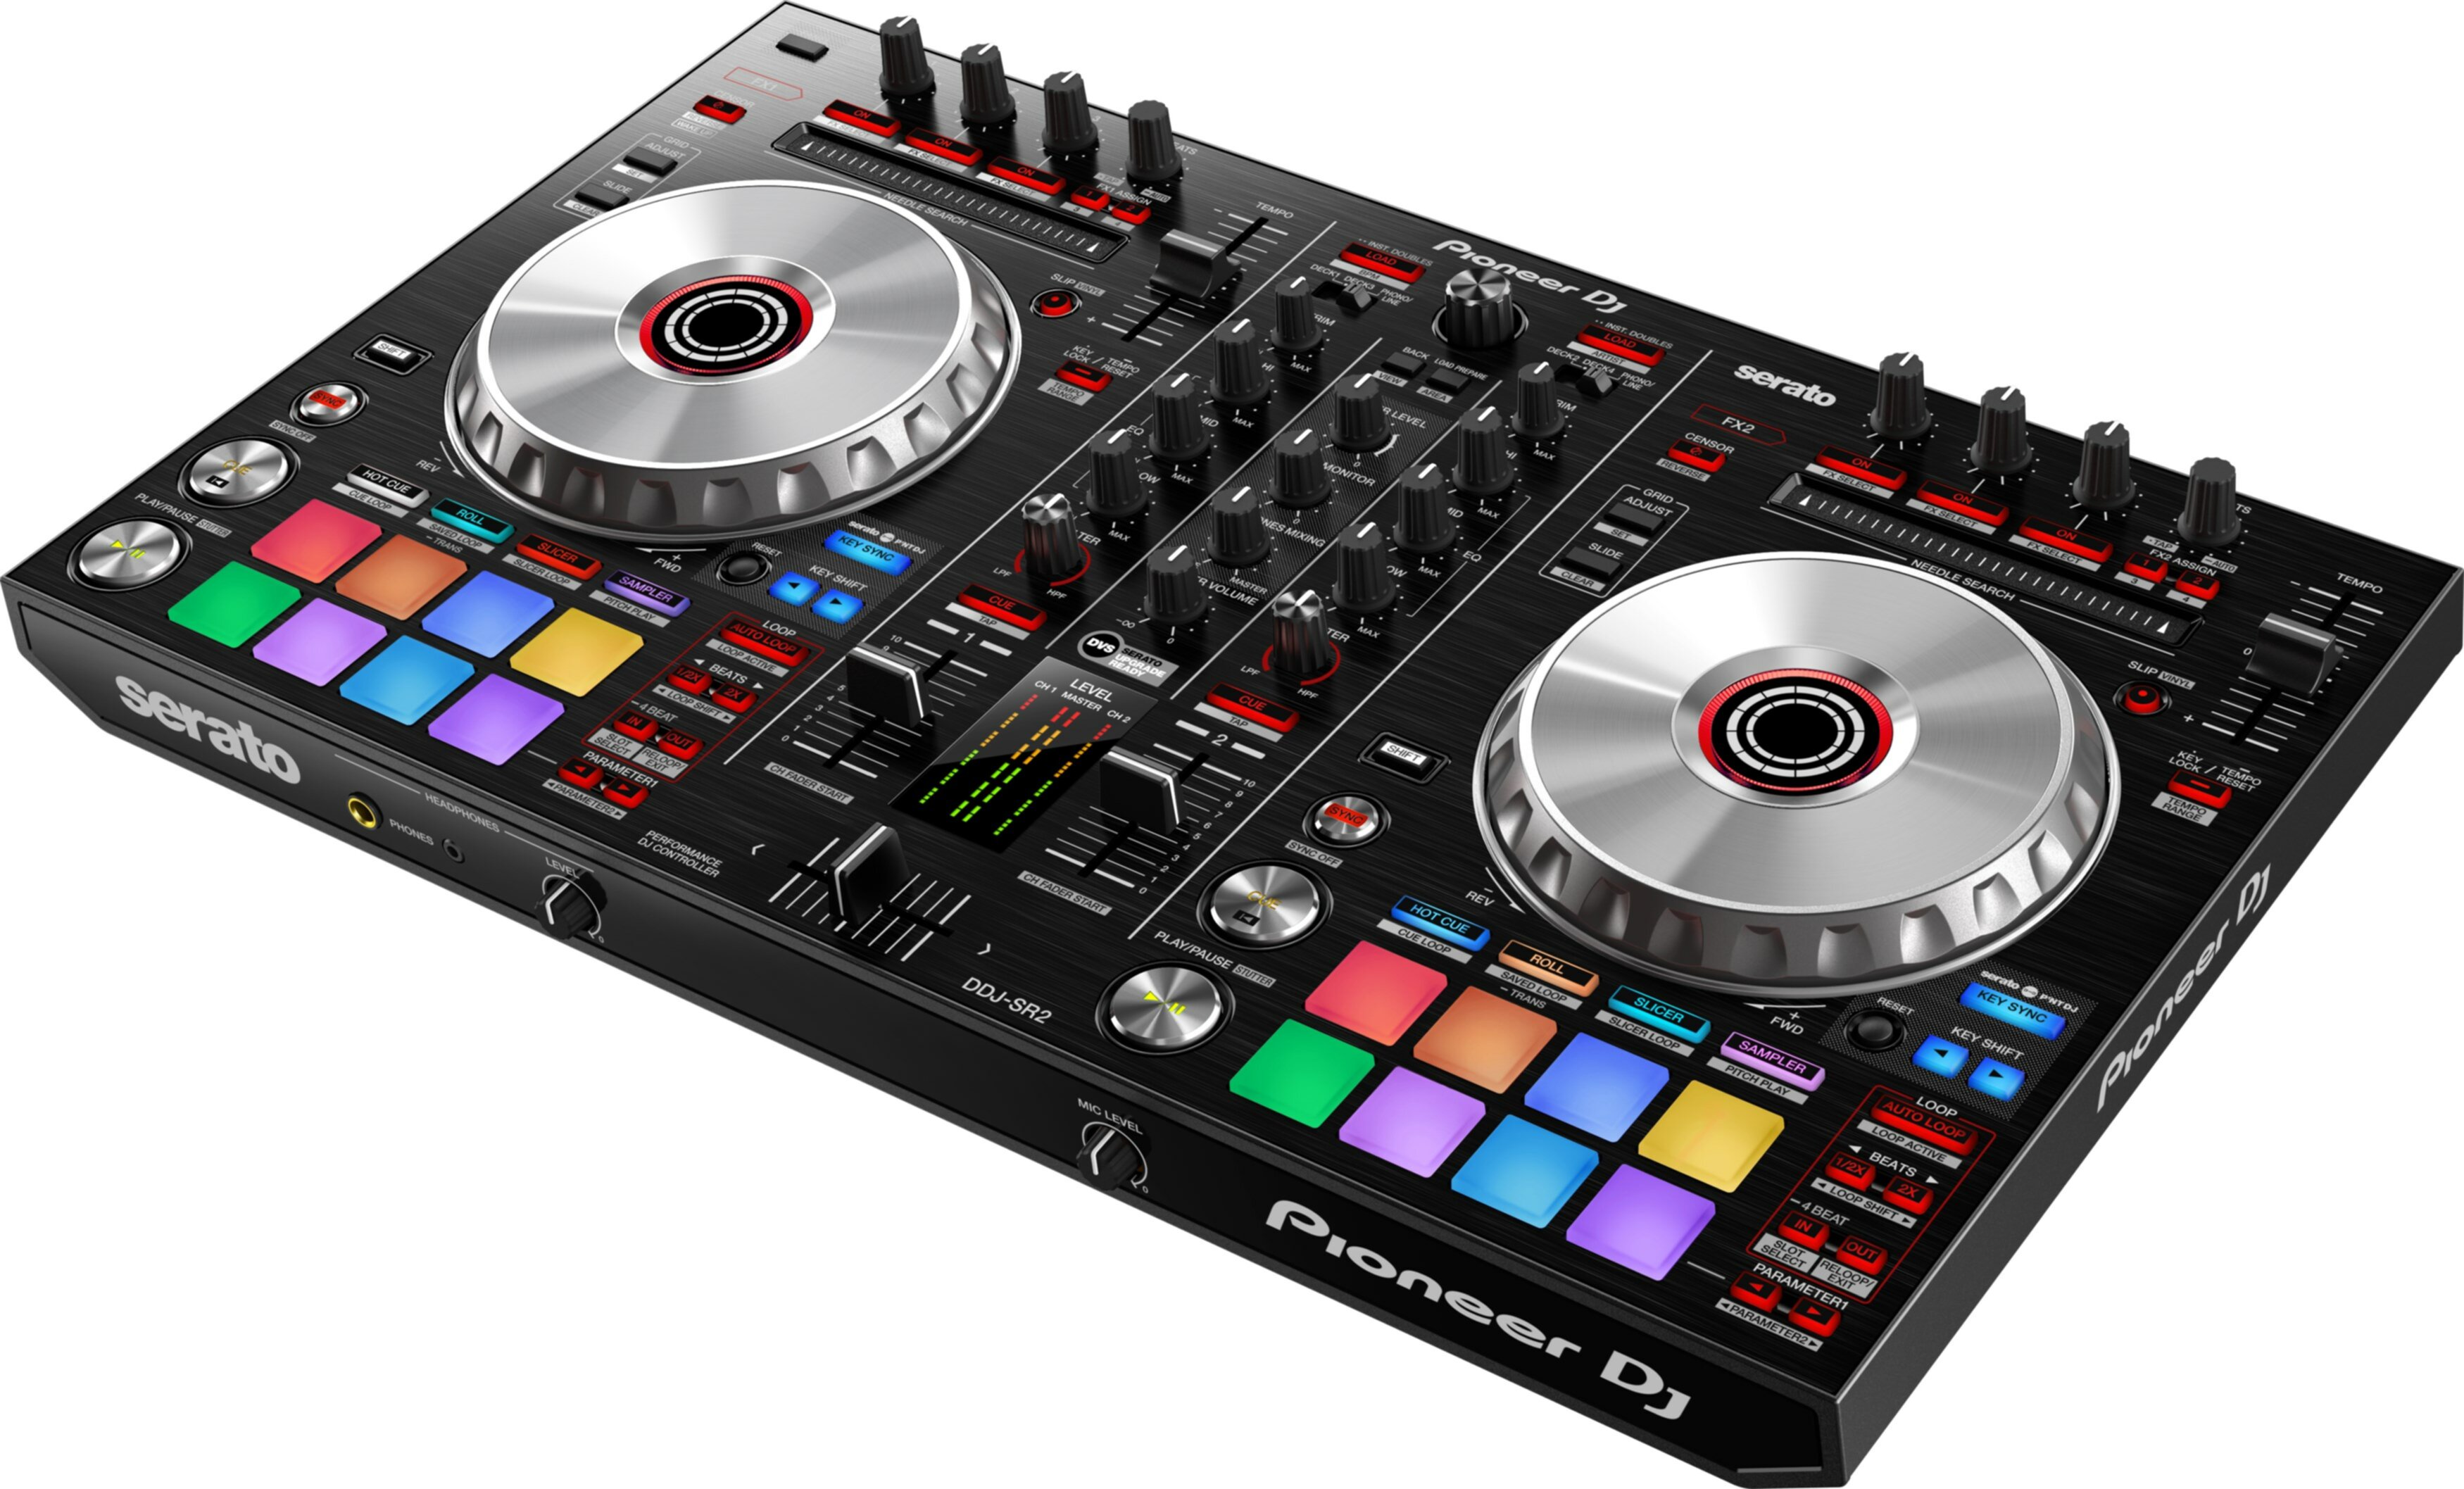 PIONEER DJ DDJ1000 Contrôleur DJ - 1449,00€ - La musique au